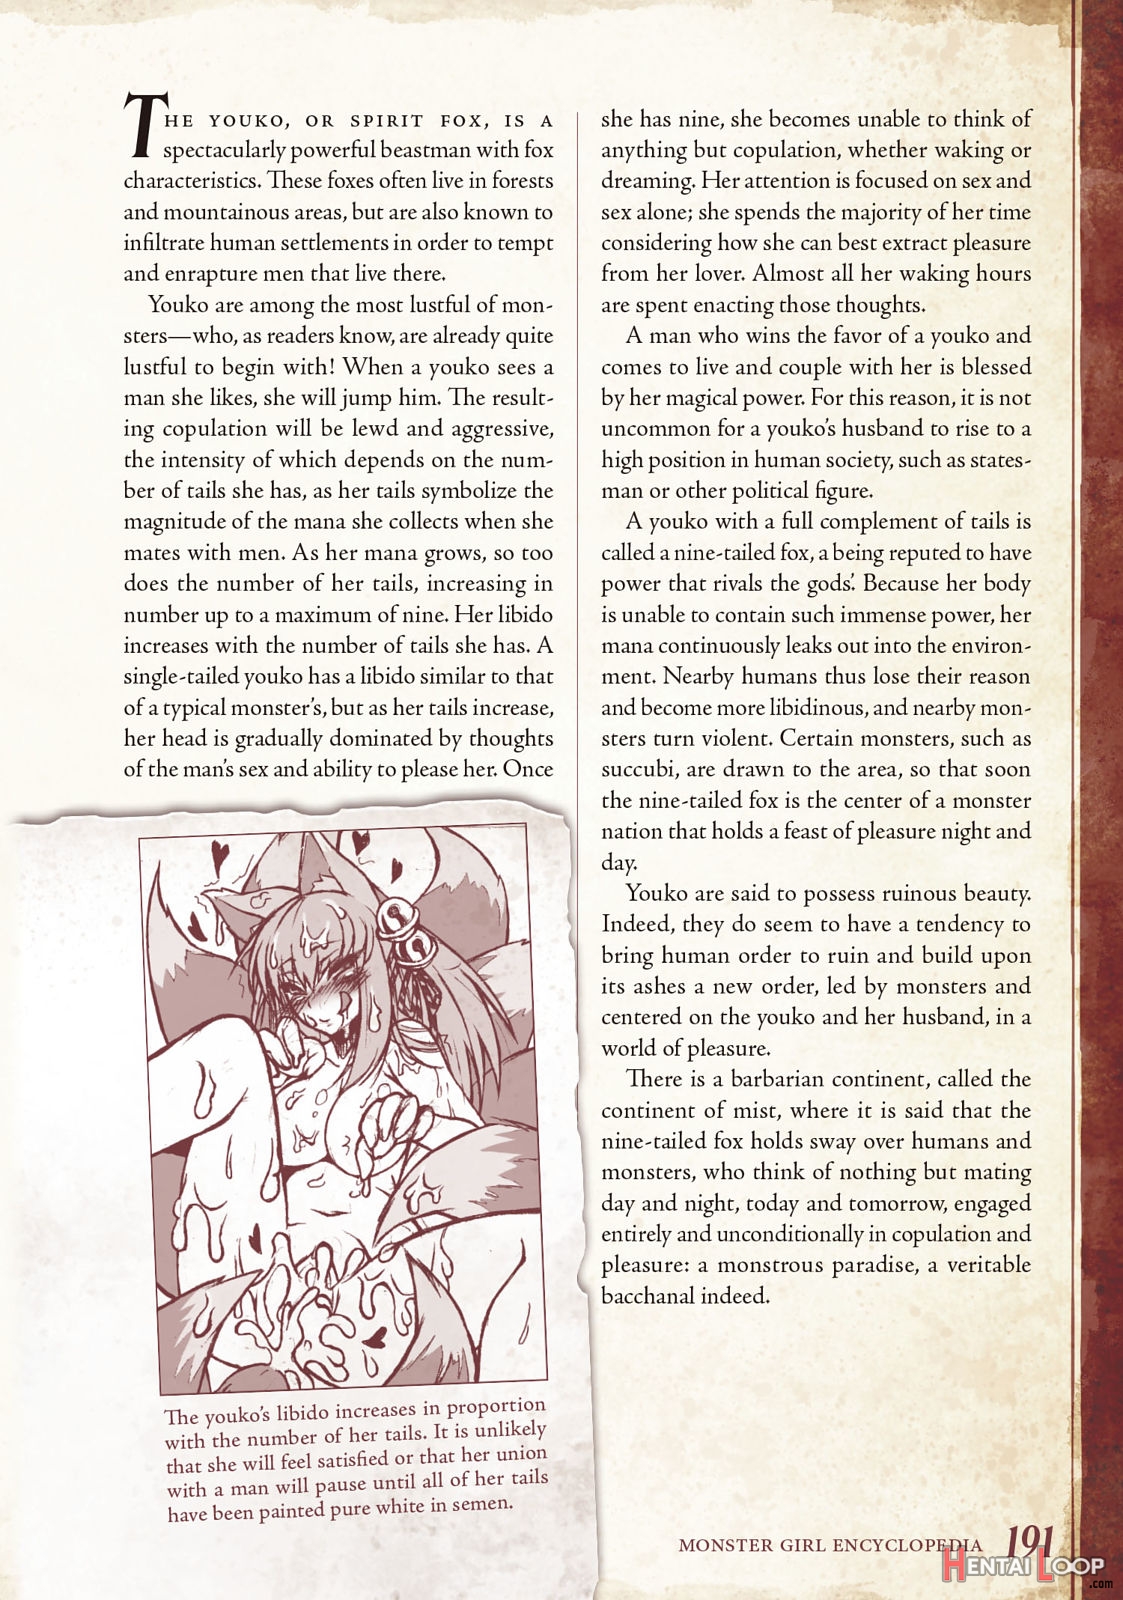 Monster Girl Encyclopedia Vol. 1 page 192